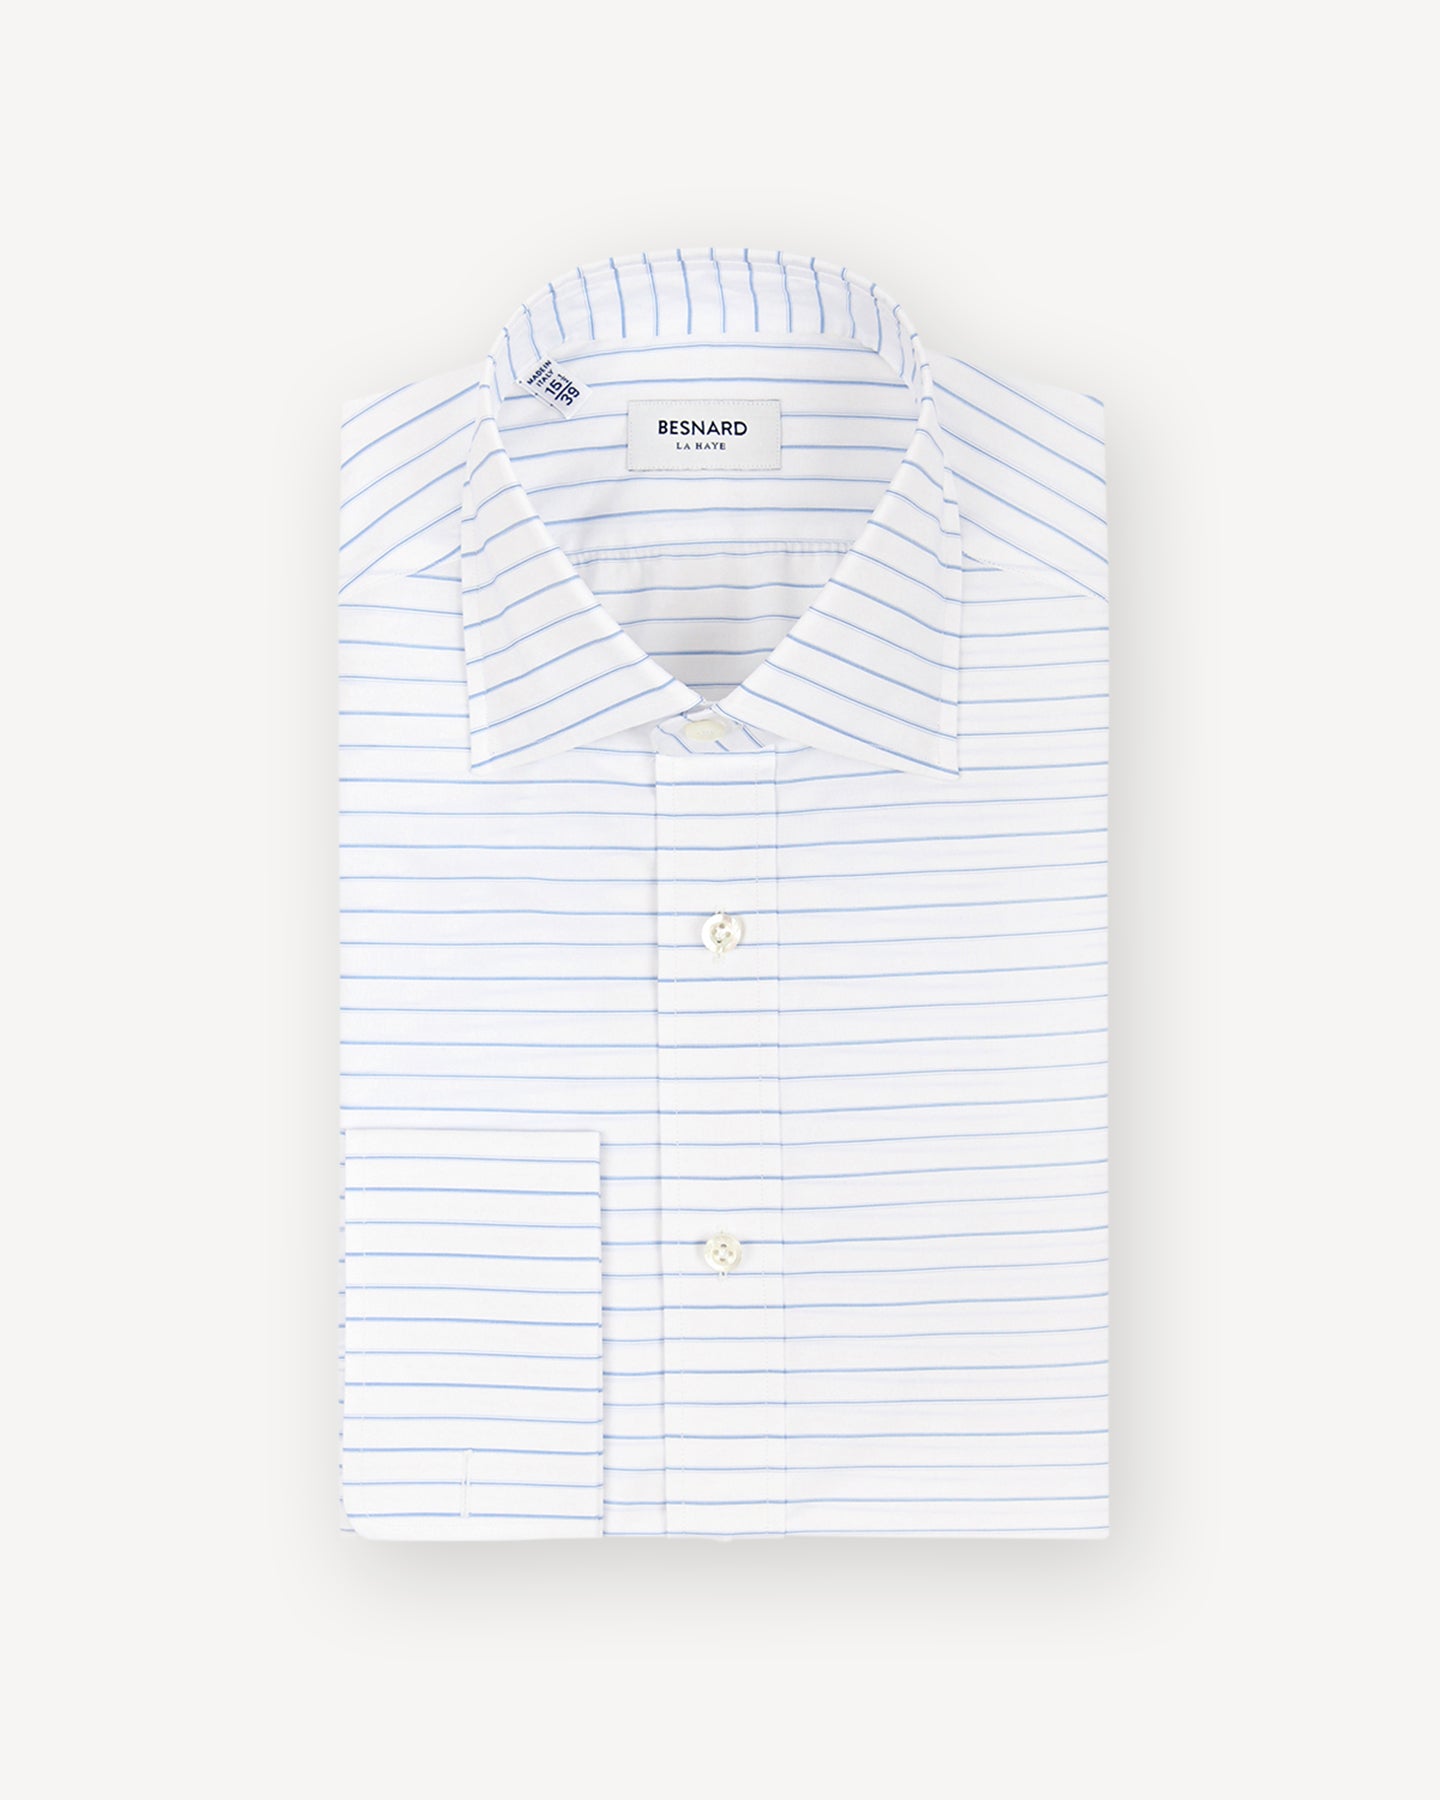 Horizontal striped shirt as worn by Gordon Gekko in Wall Street